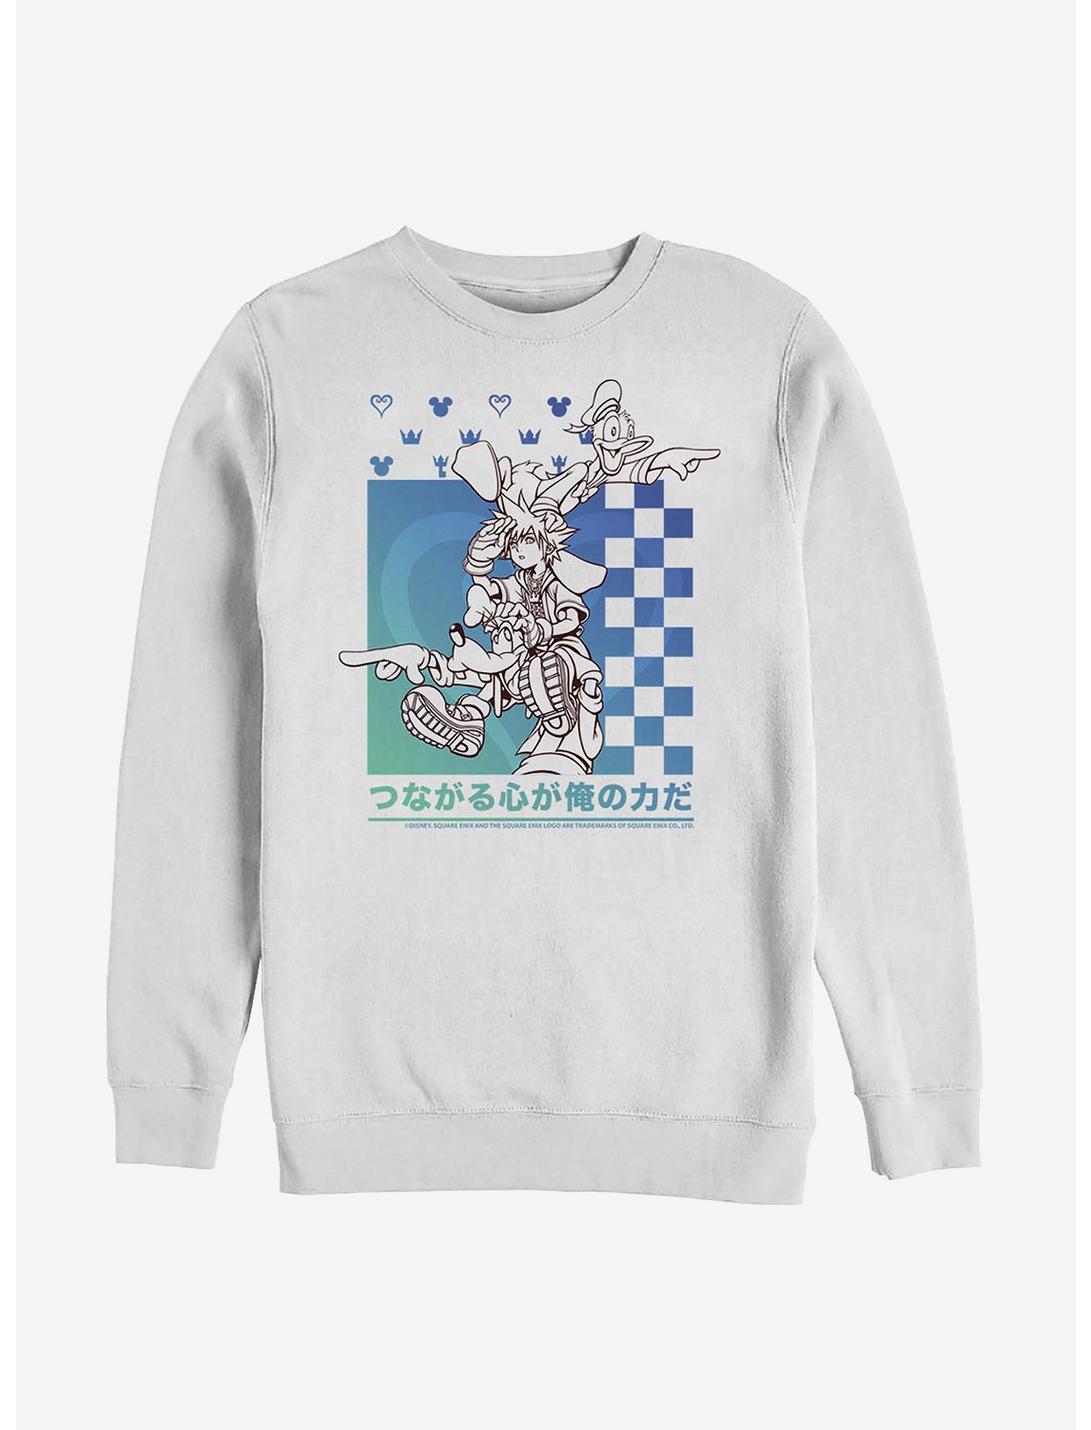 Disney Kingdom Hearts Power Friends Crew Sweatshirt, WHITE, hi-res